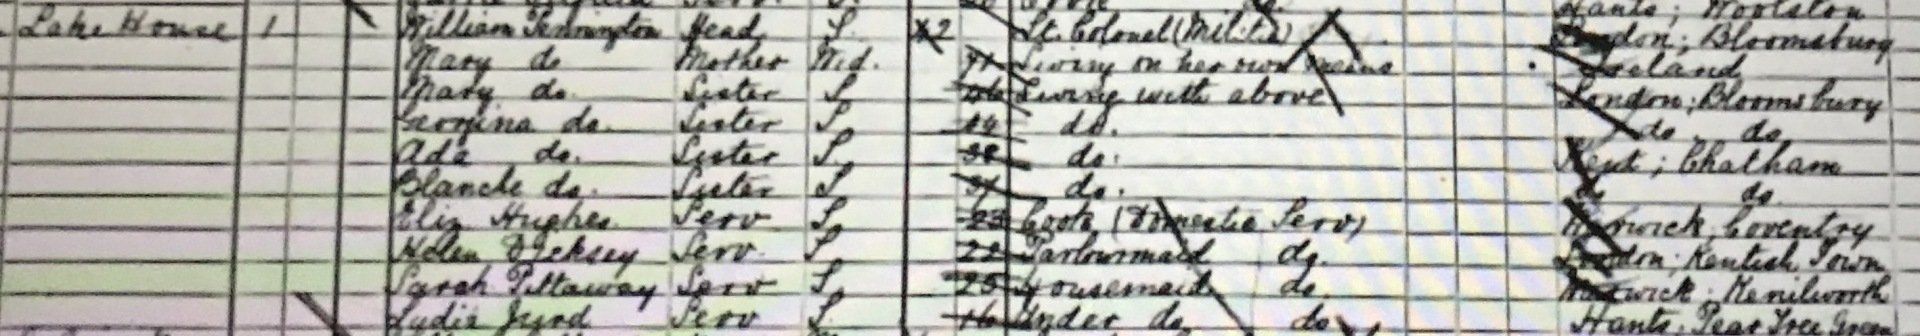 1891 Census for Pennington Family in Netley Abbey